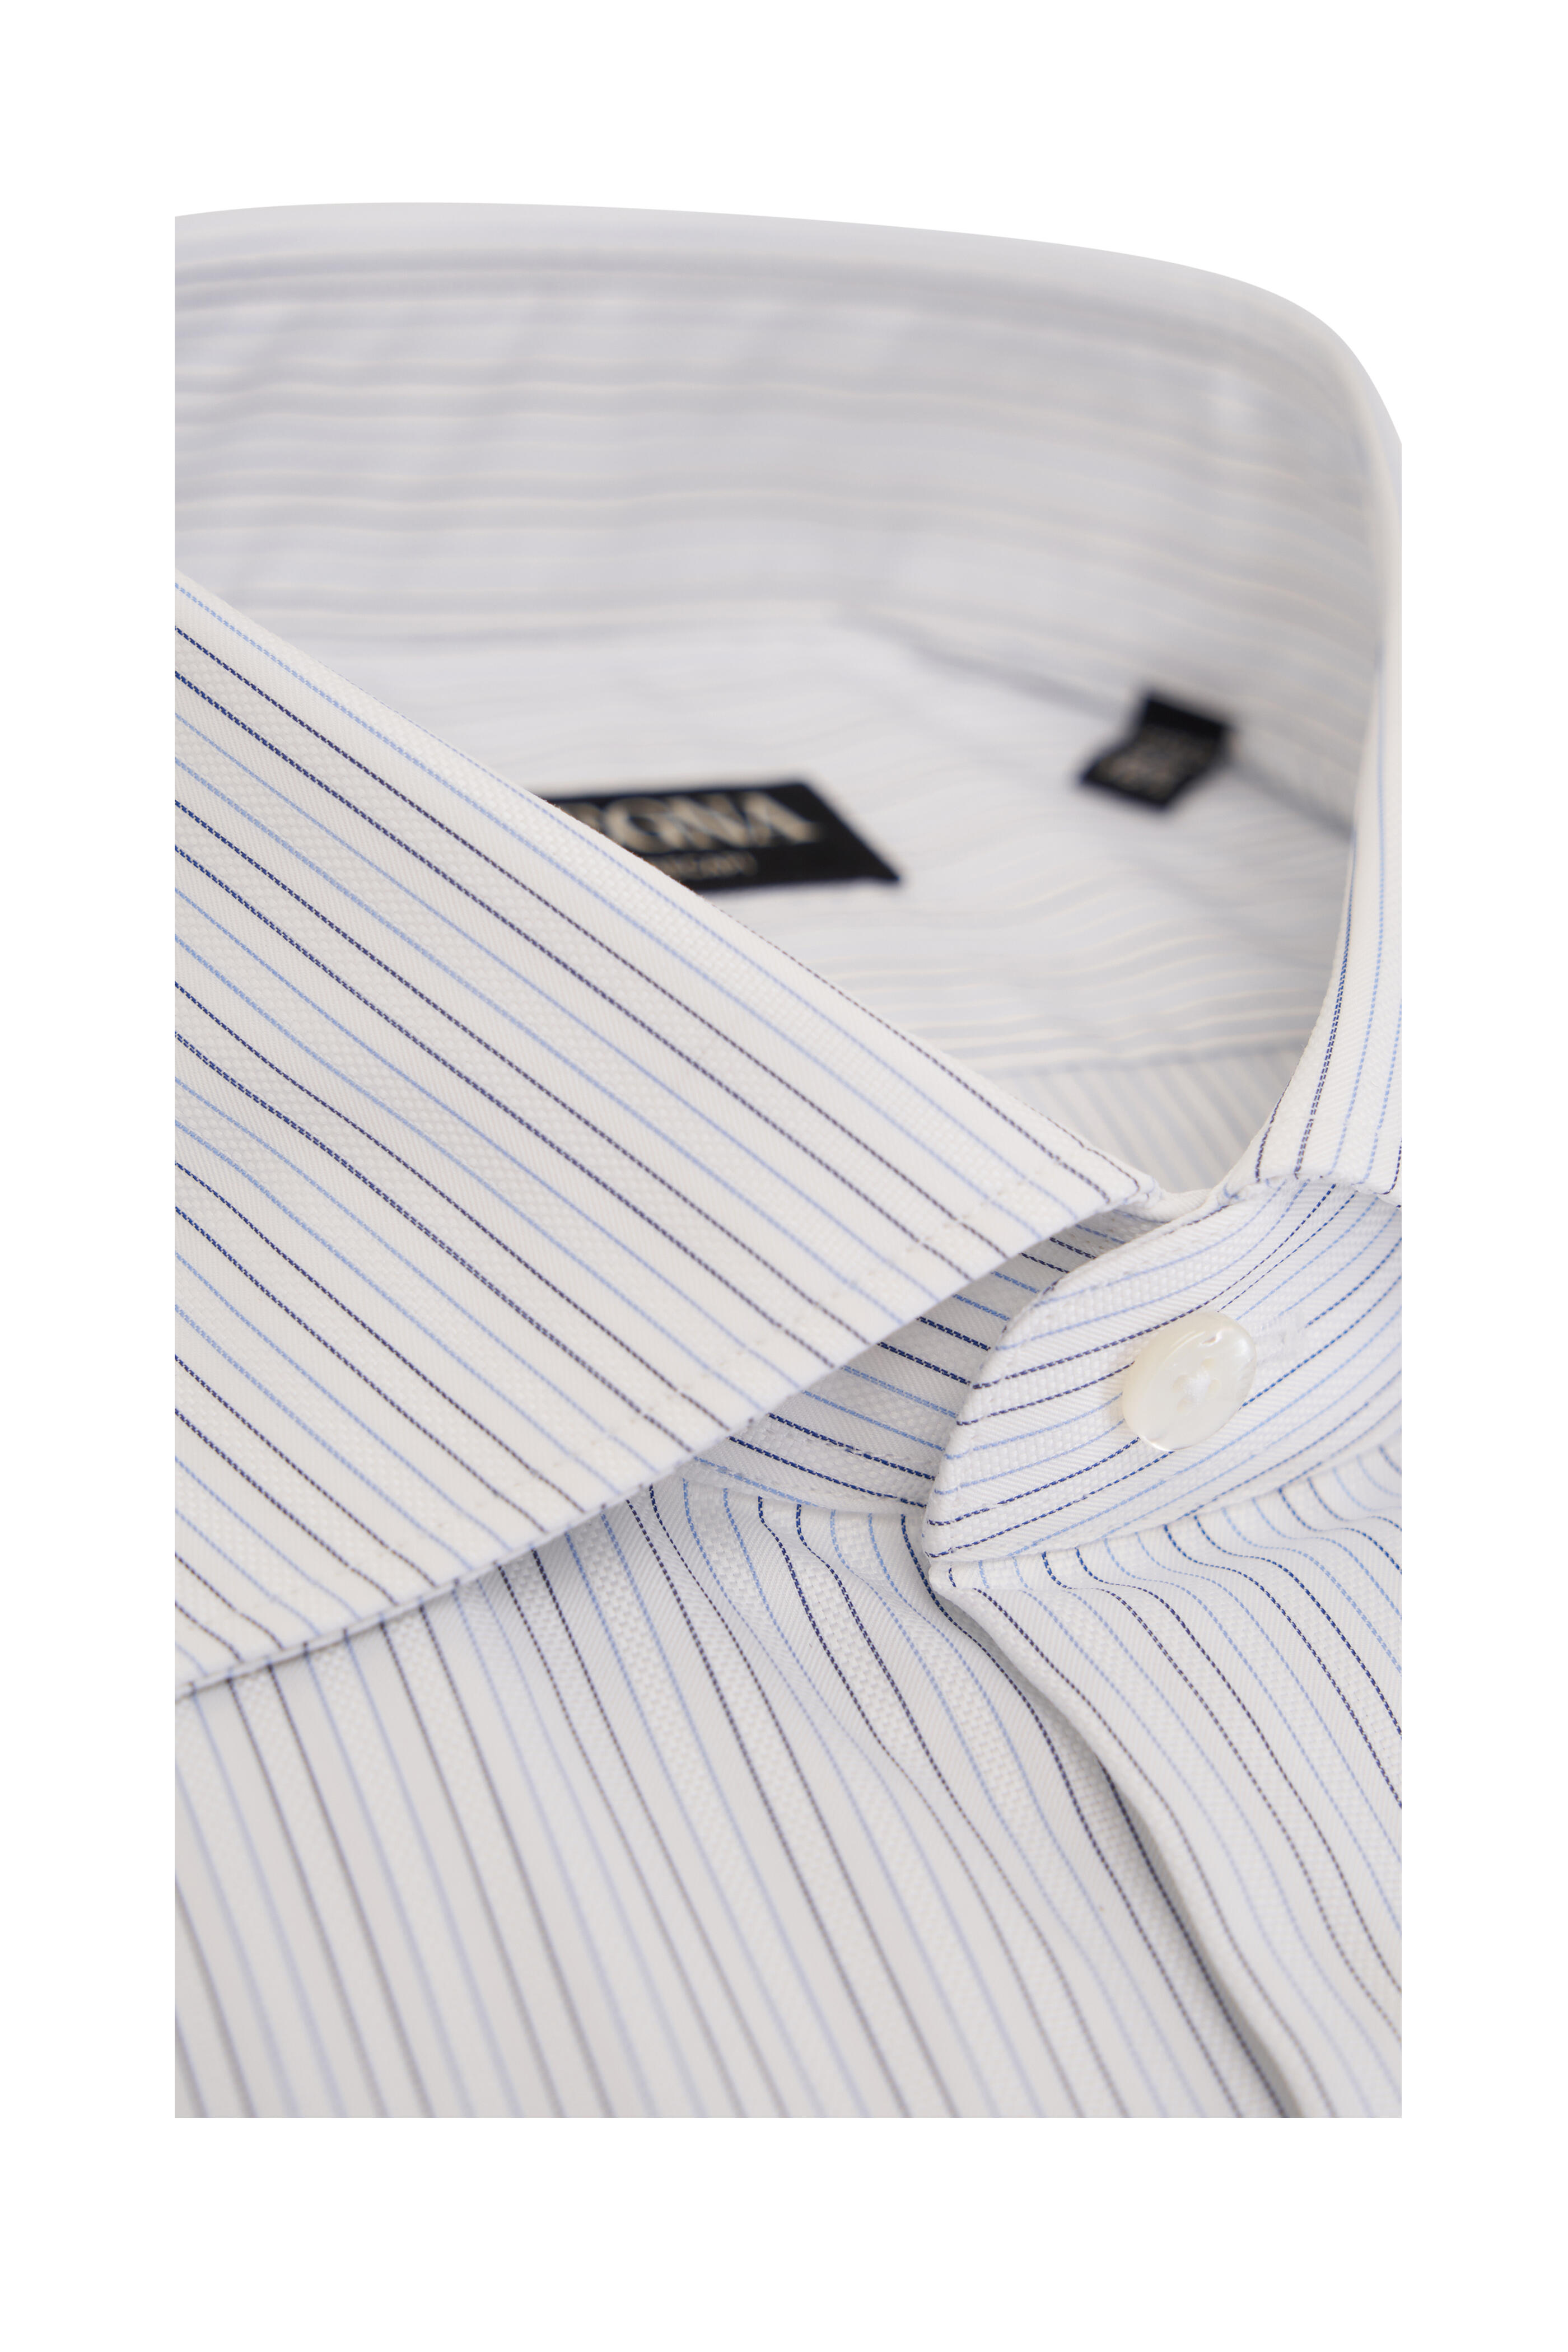 Zegna - Light Blue & White Stripe Cotton Dress Shirt